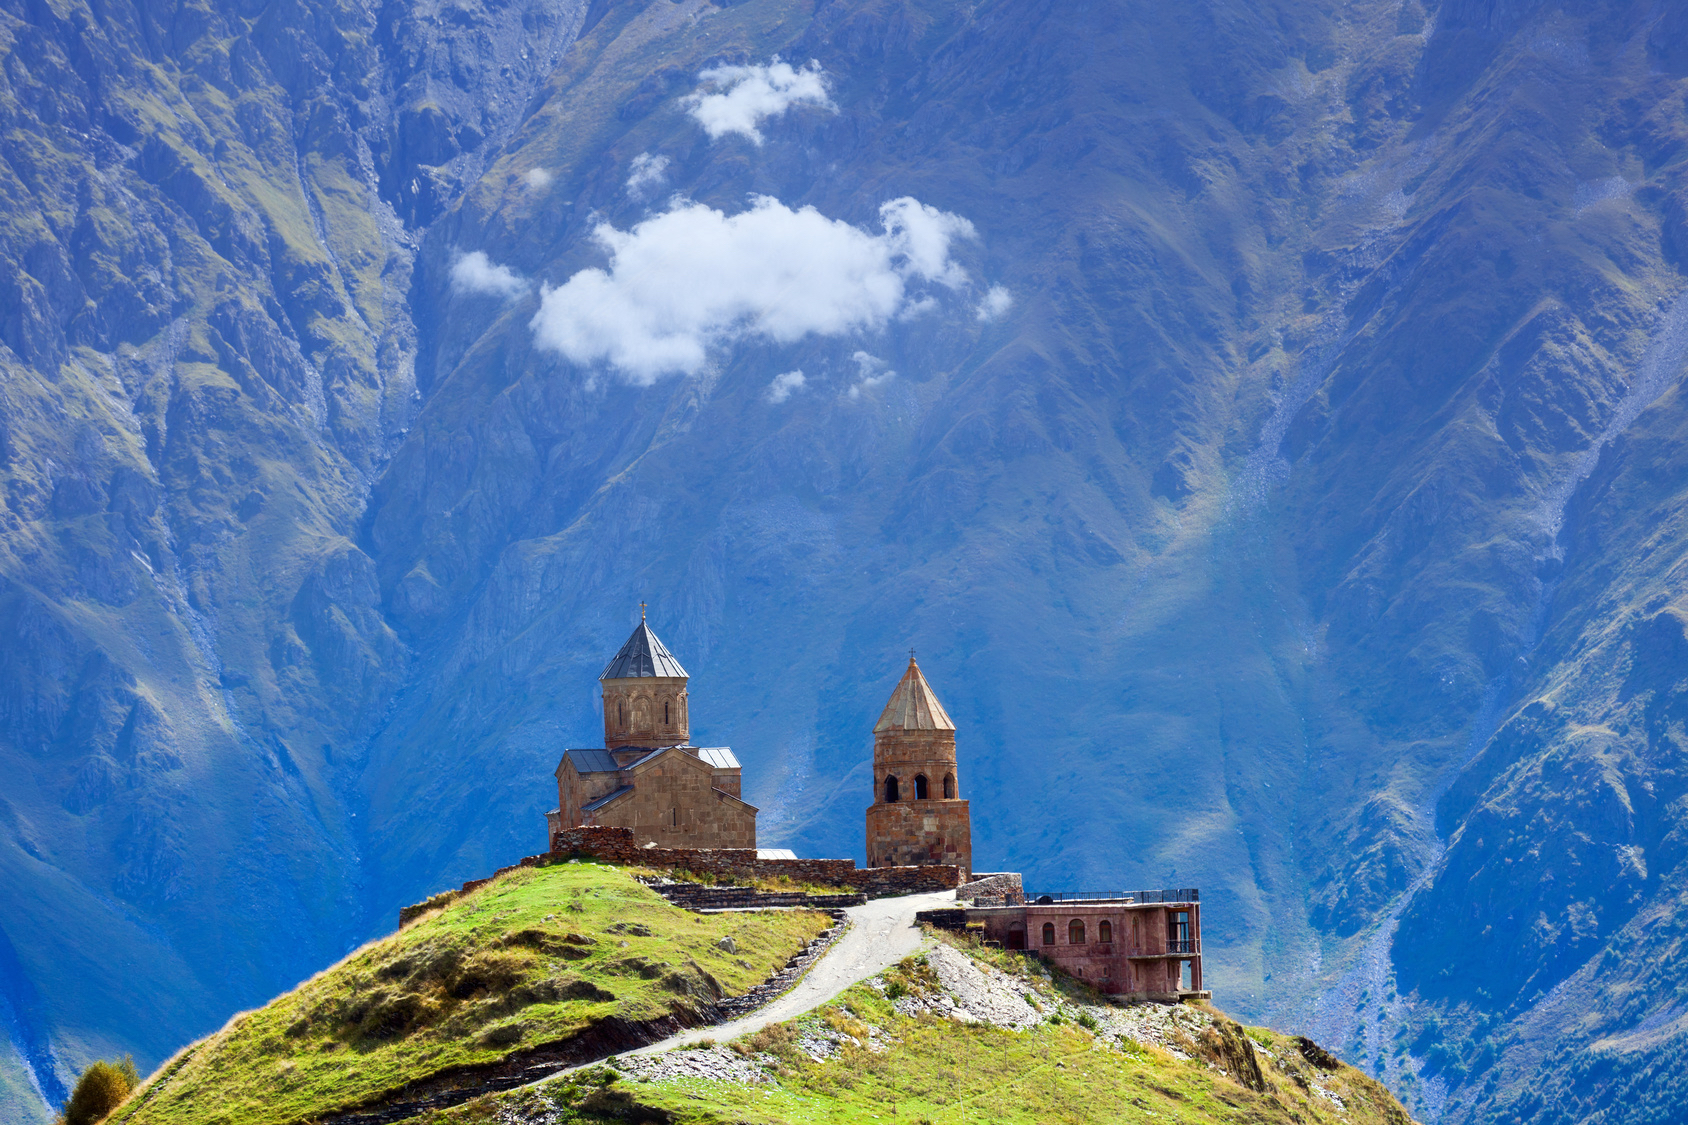 Gergeti Christian church near Kazbegi, Stepancminda village in Georgia, Caucasus